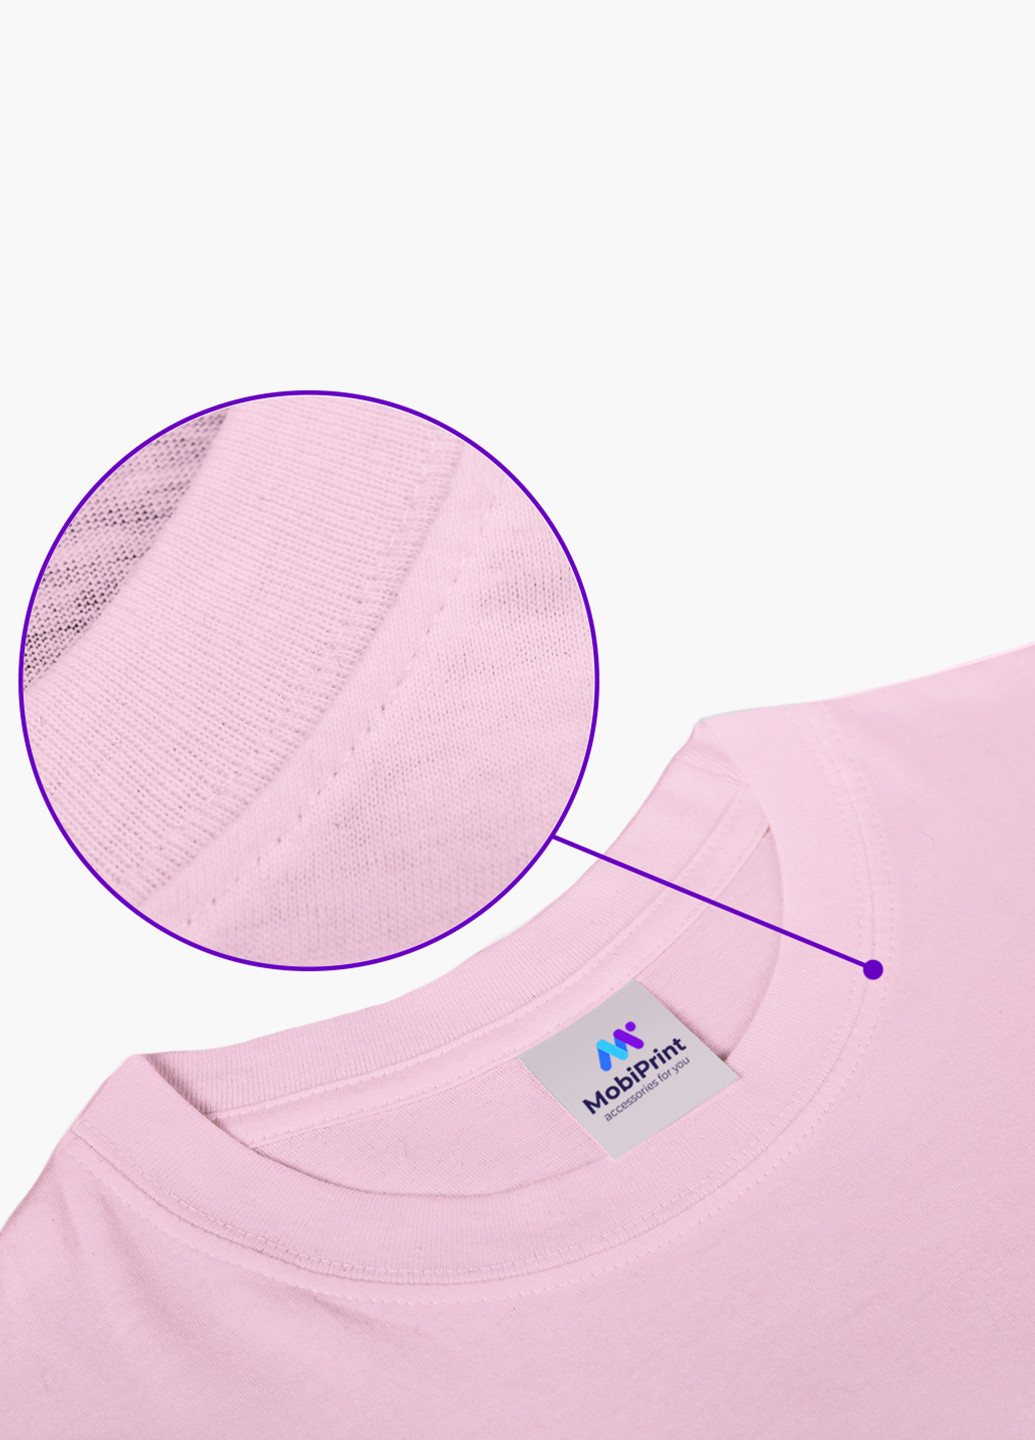 Розовая демисезонная футболка детская фортнайт (fortnite)(9224-1195) MobiPrint